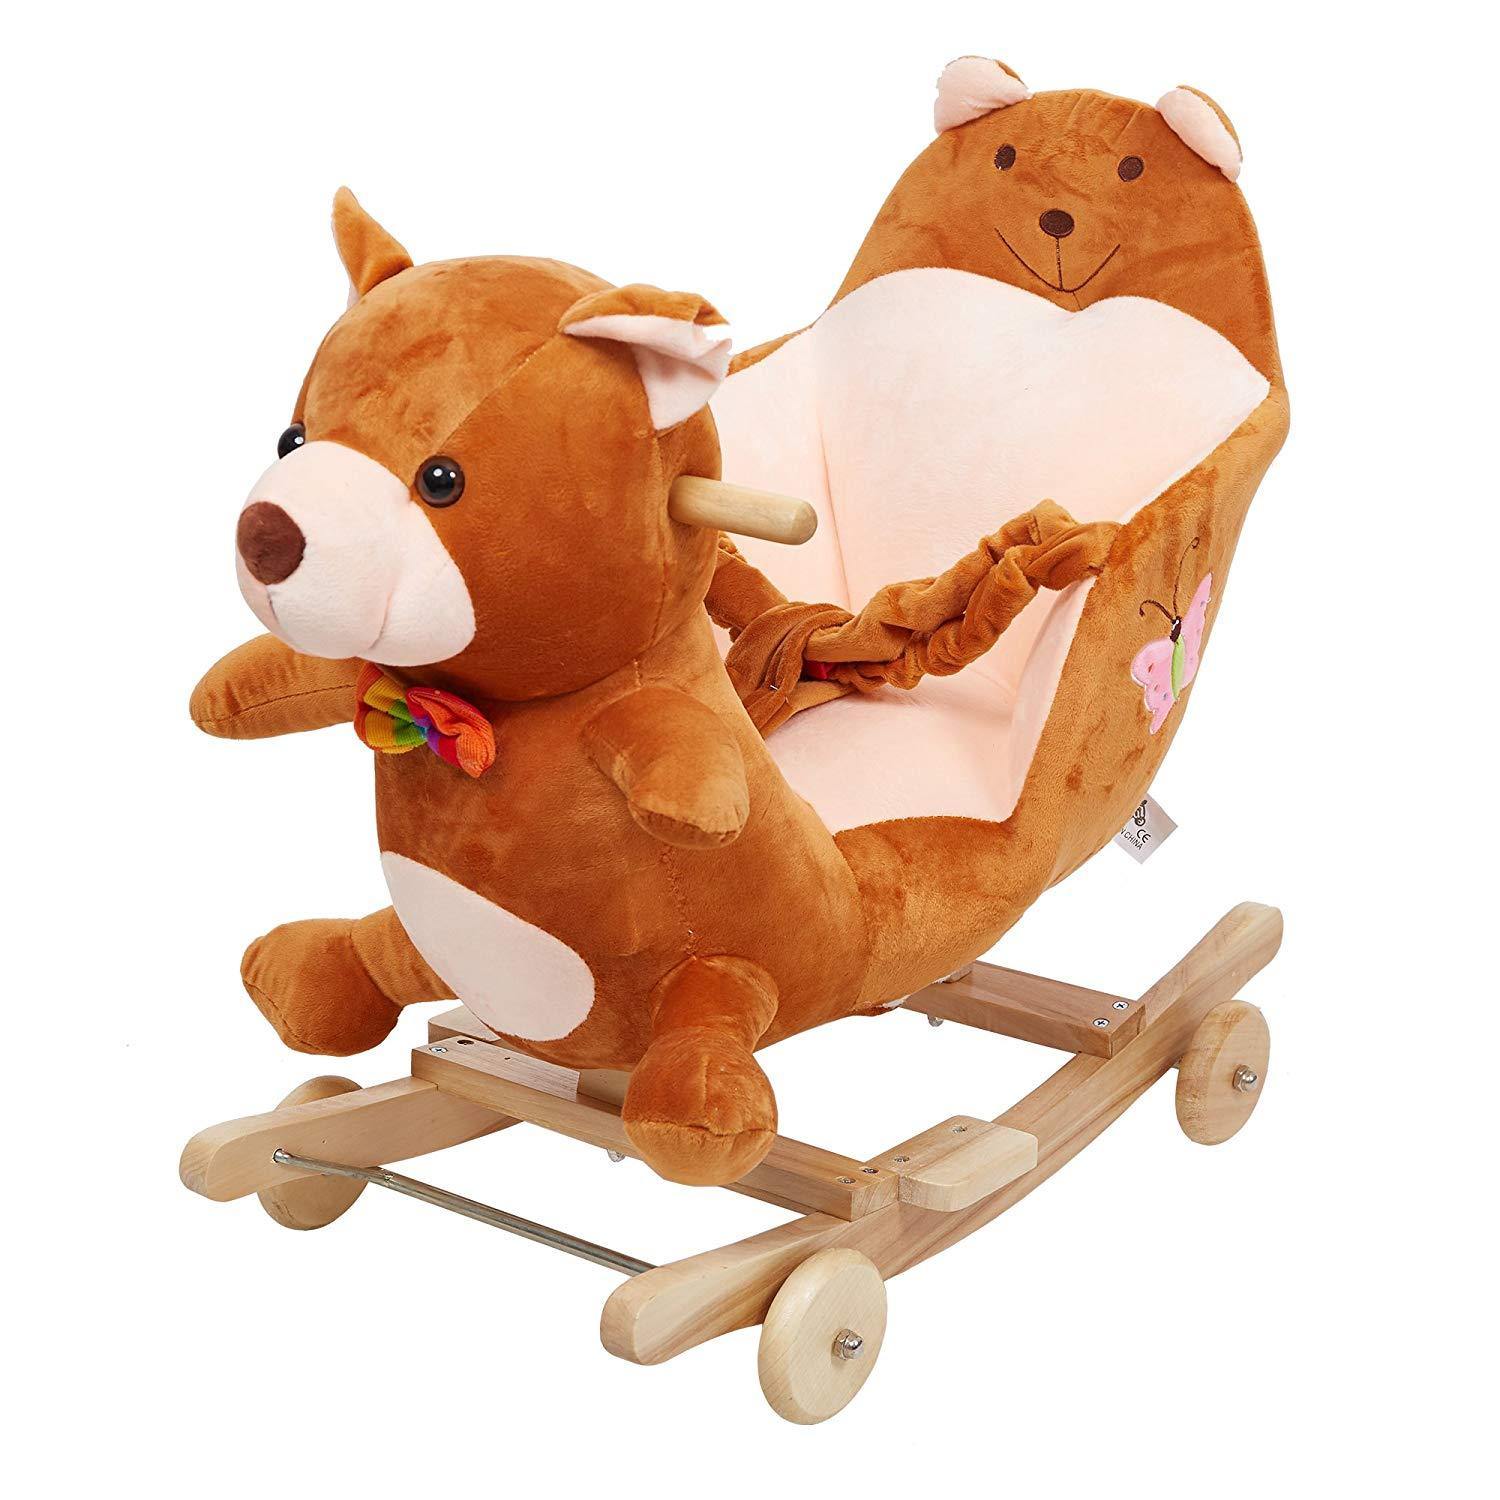 Bosonshop Children Wooden& Plush Rocking Horse Toy,Brown Bear